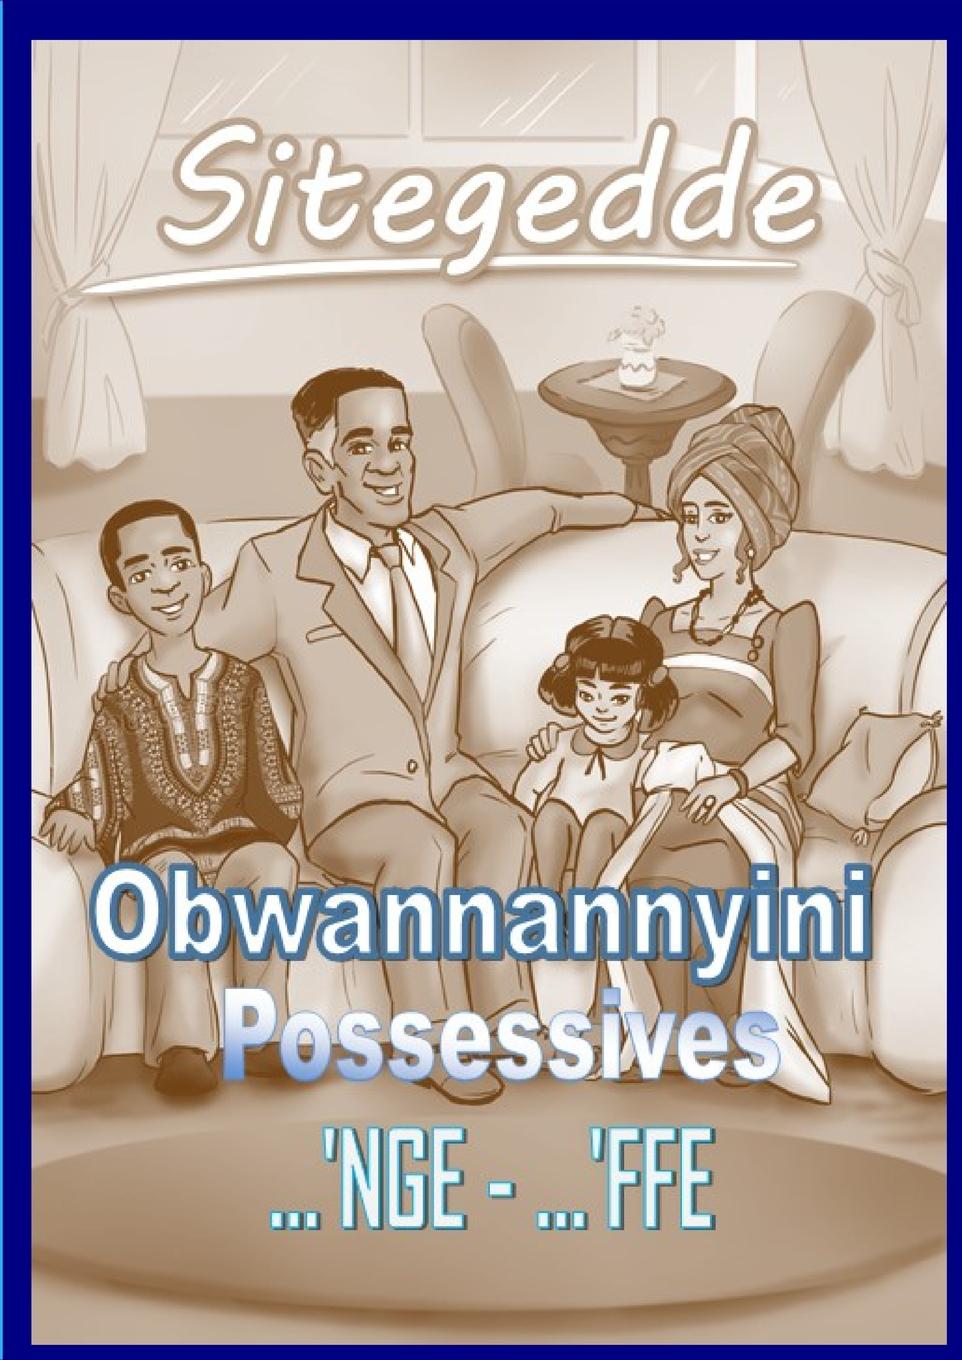 Book Sitegedde - Luganda Possesives and Pronouns, 